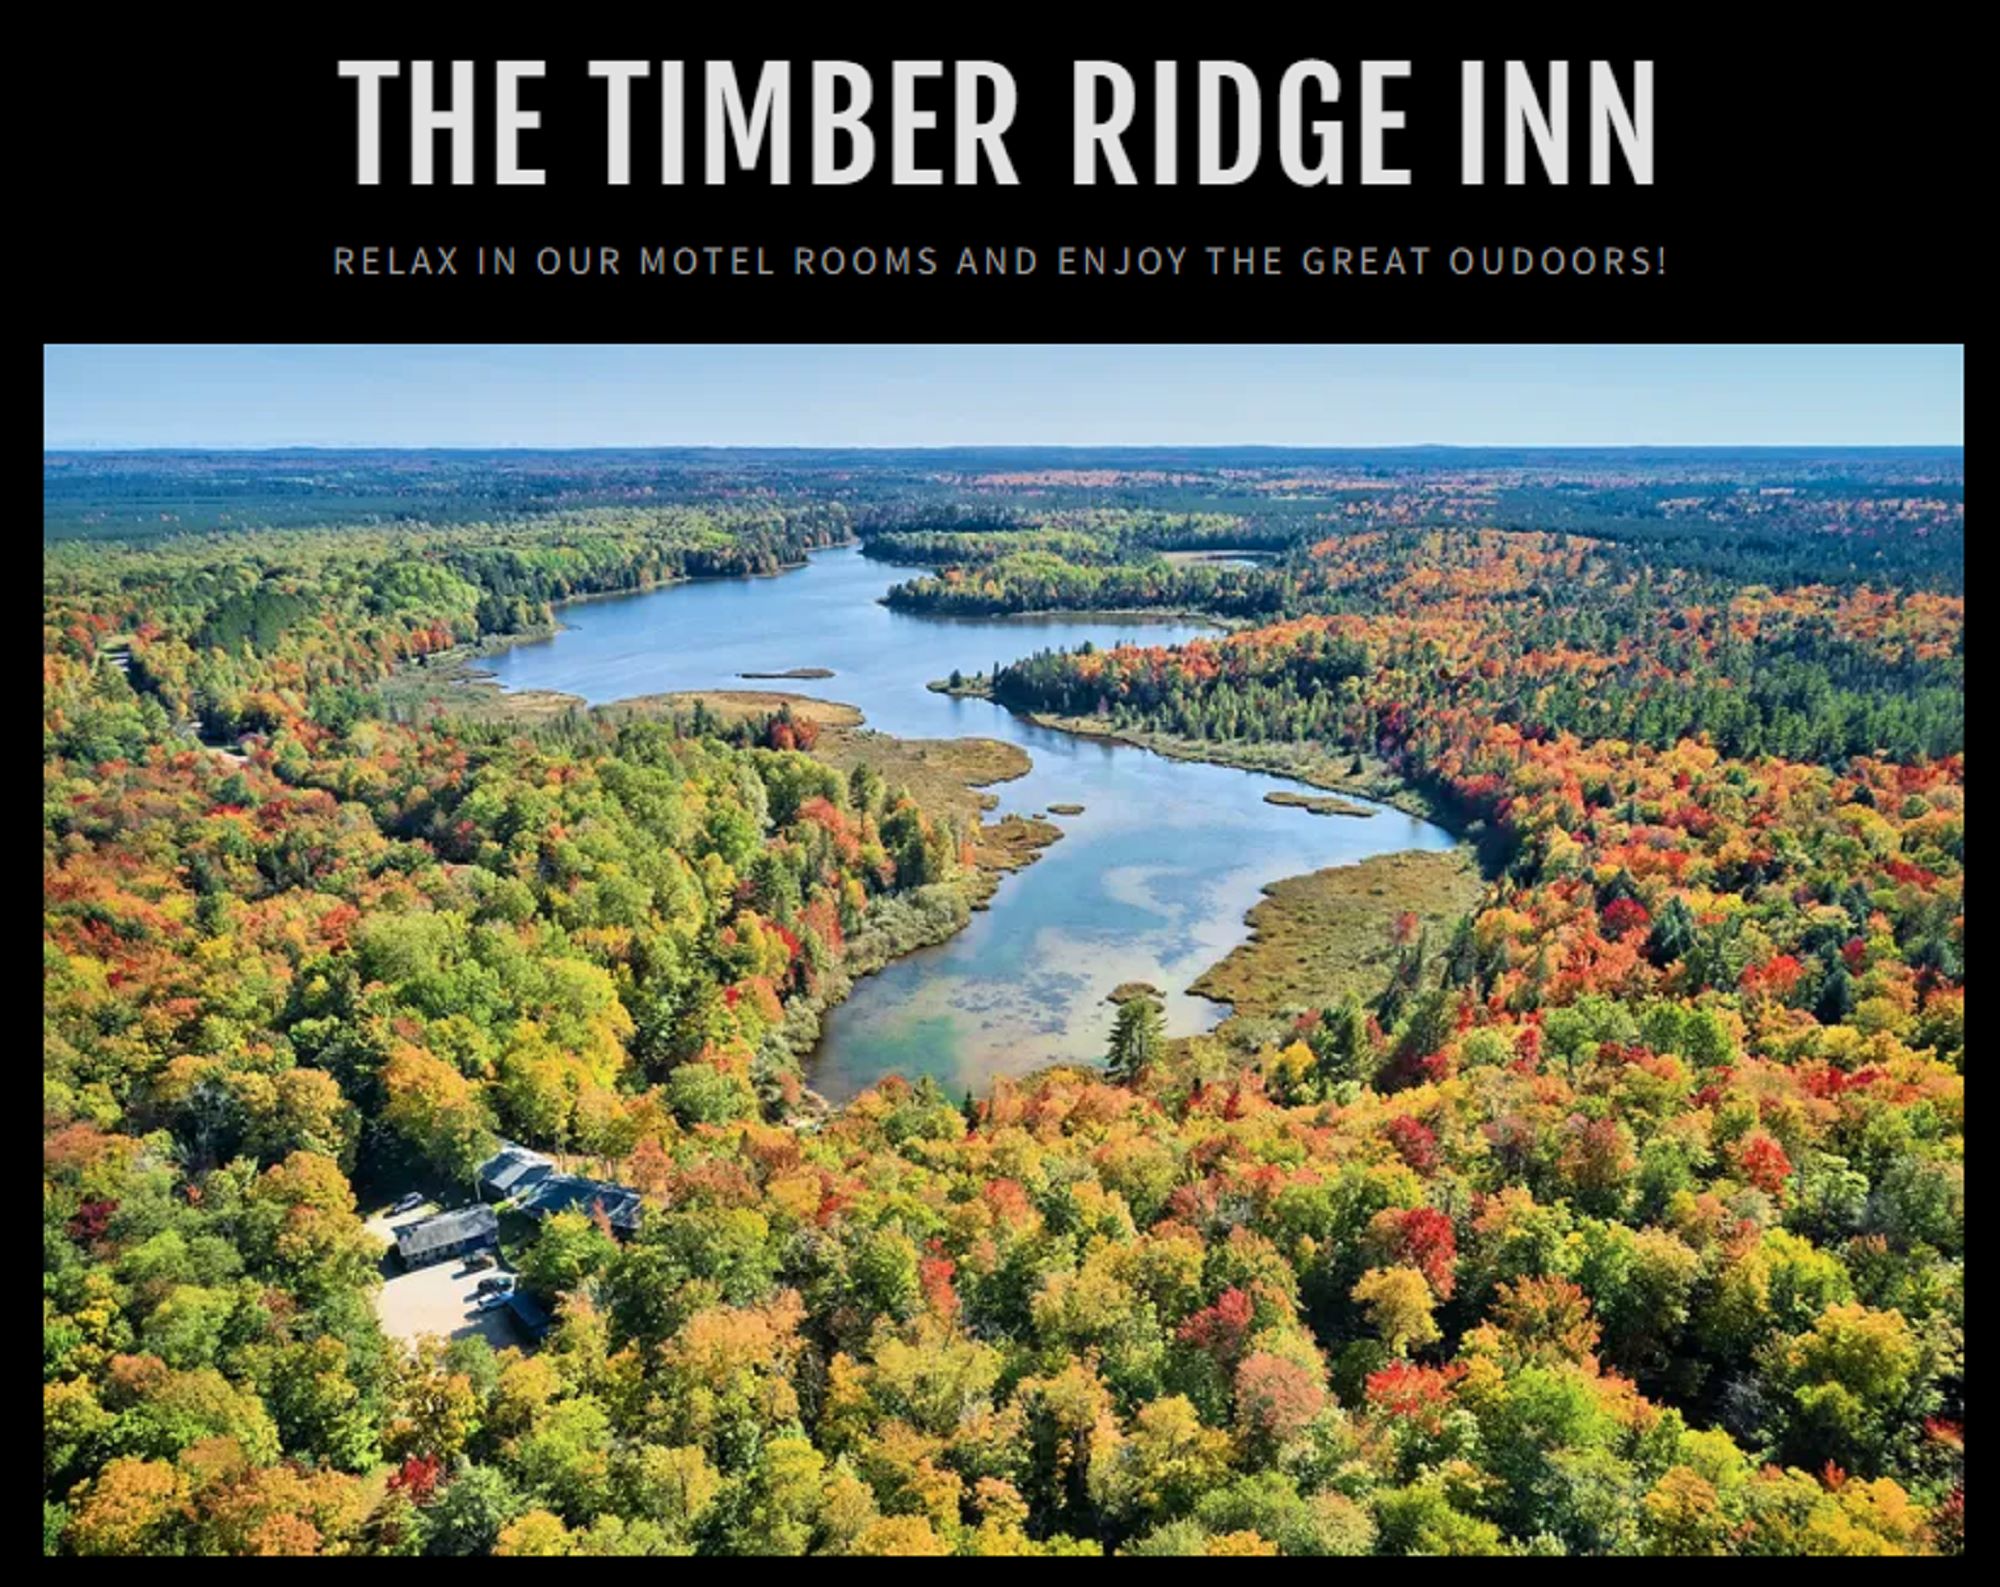 The Timber Ridge Inn